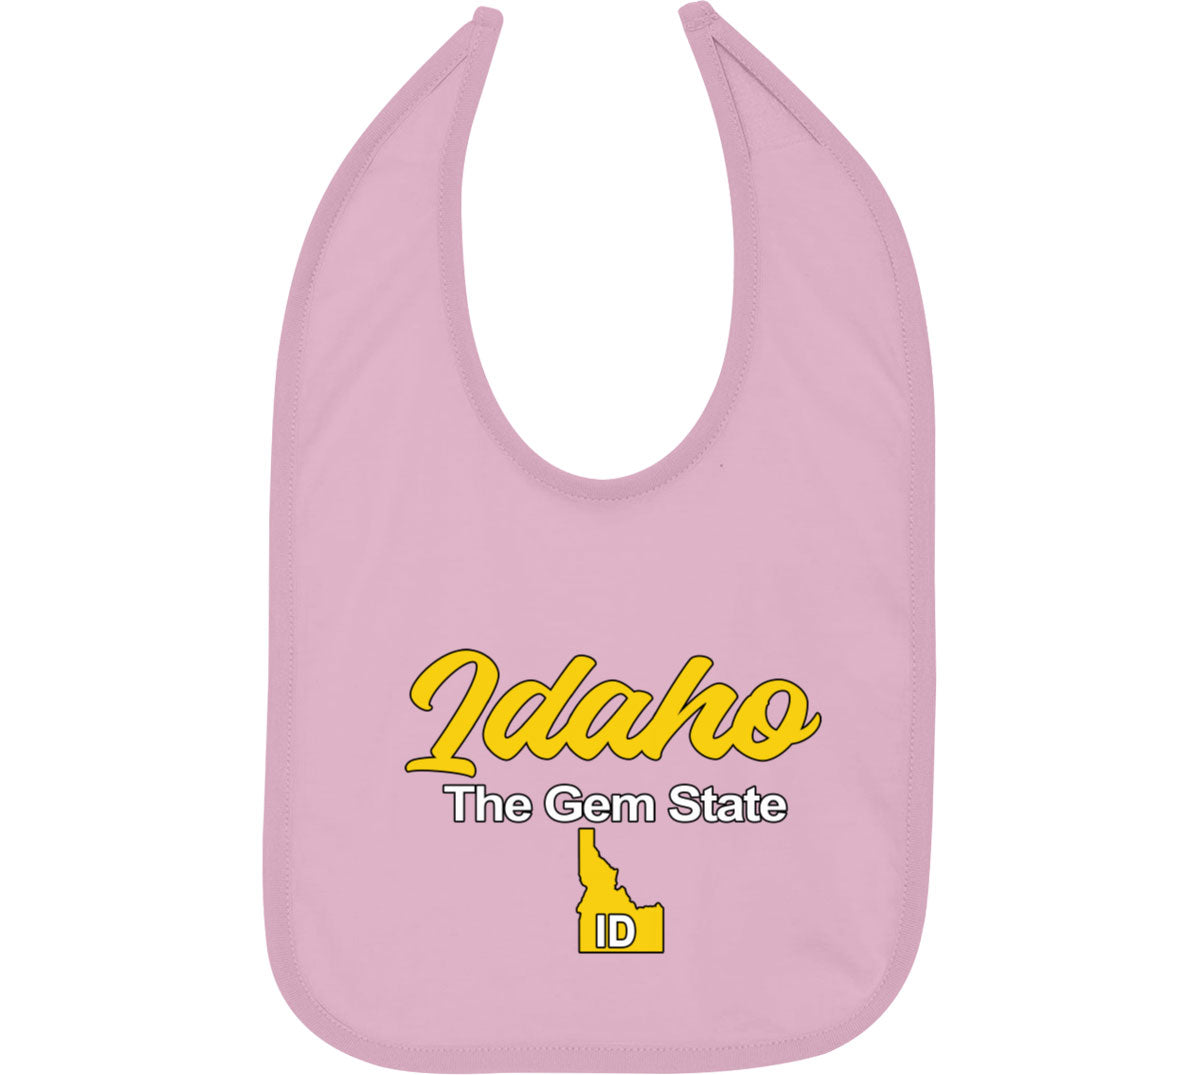 Idaho The Gem State Baby Bib